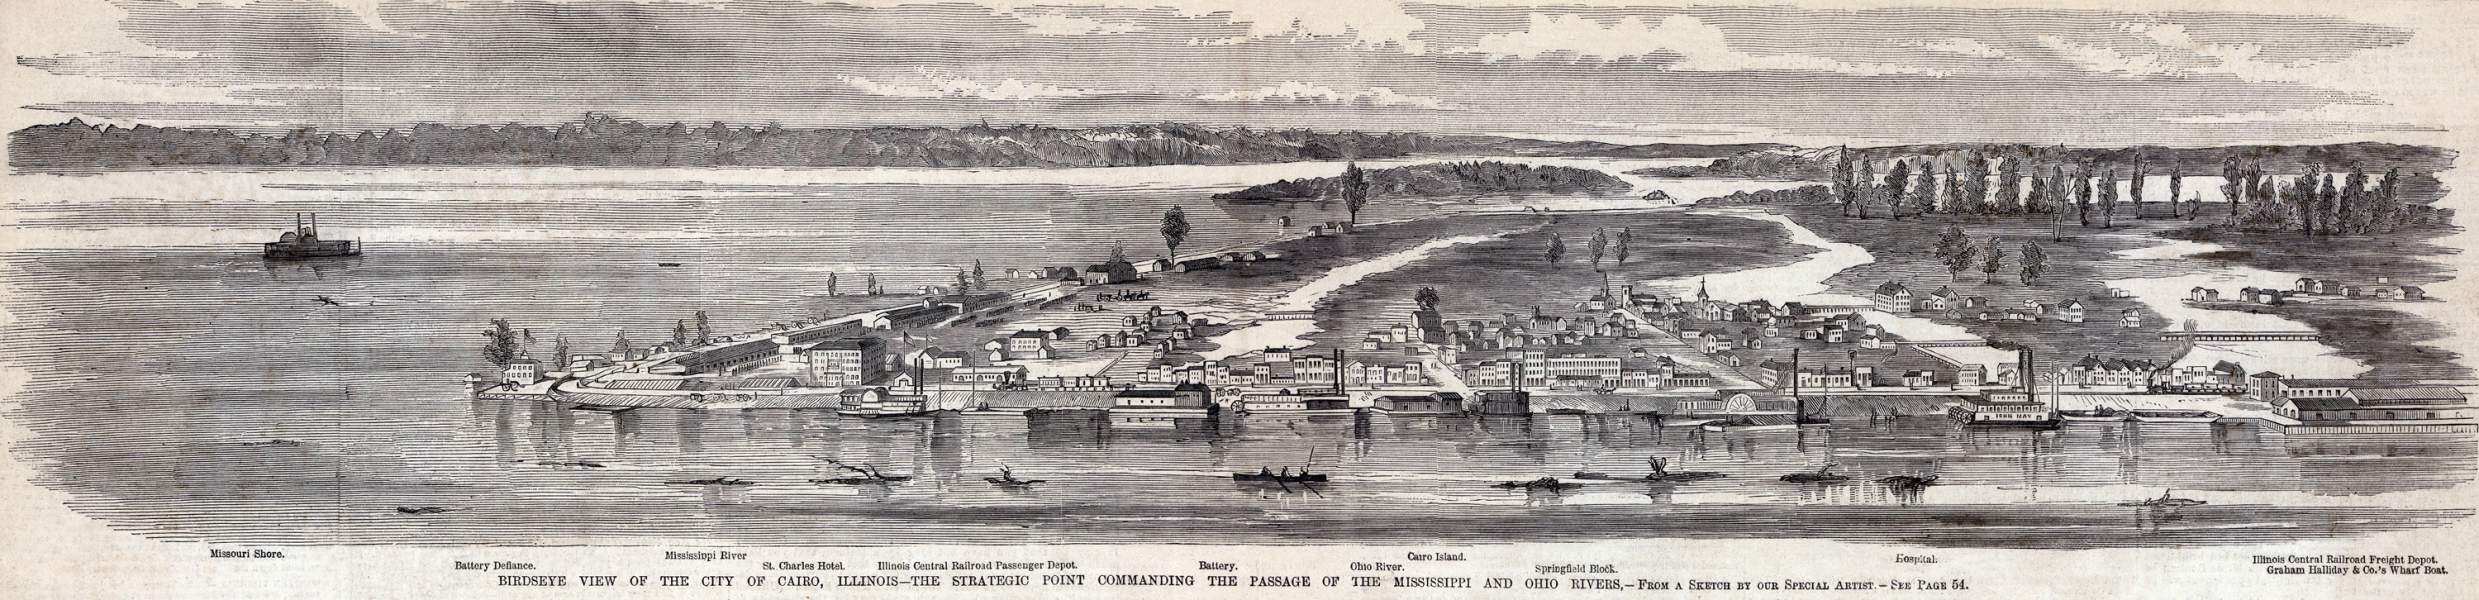 Cairo, Illinois, June 1861, bird's-eye view, zoomable image